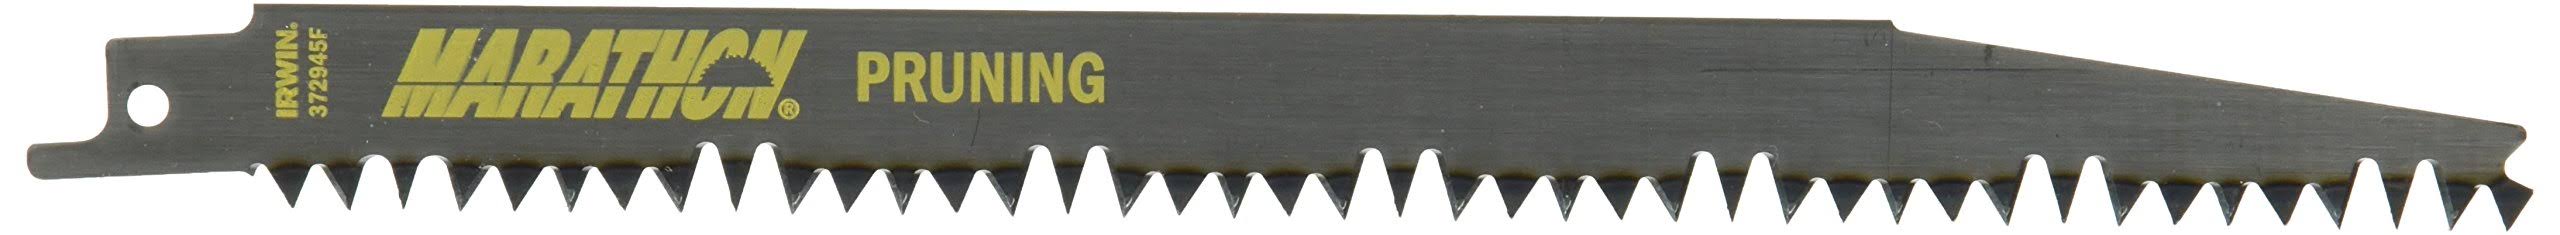 Irwin Tools Carbide Reciprocating Saw Blade